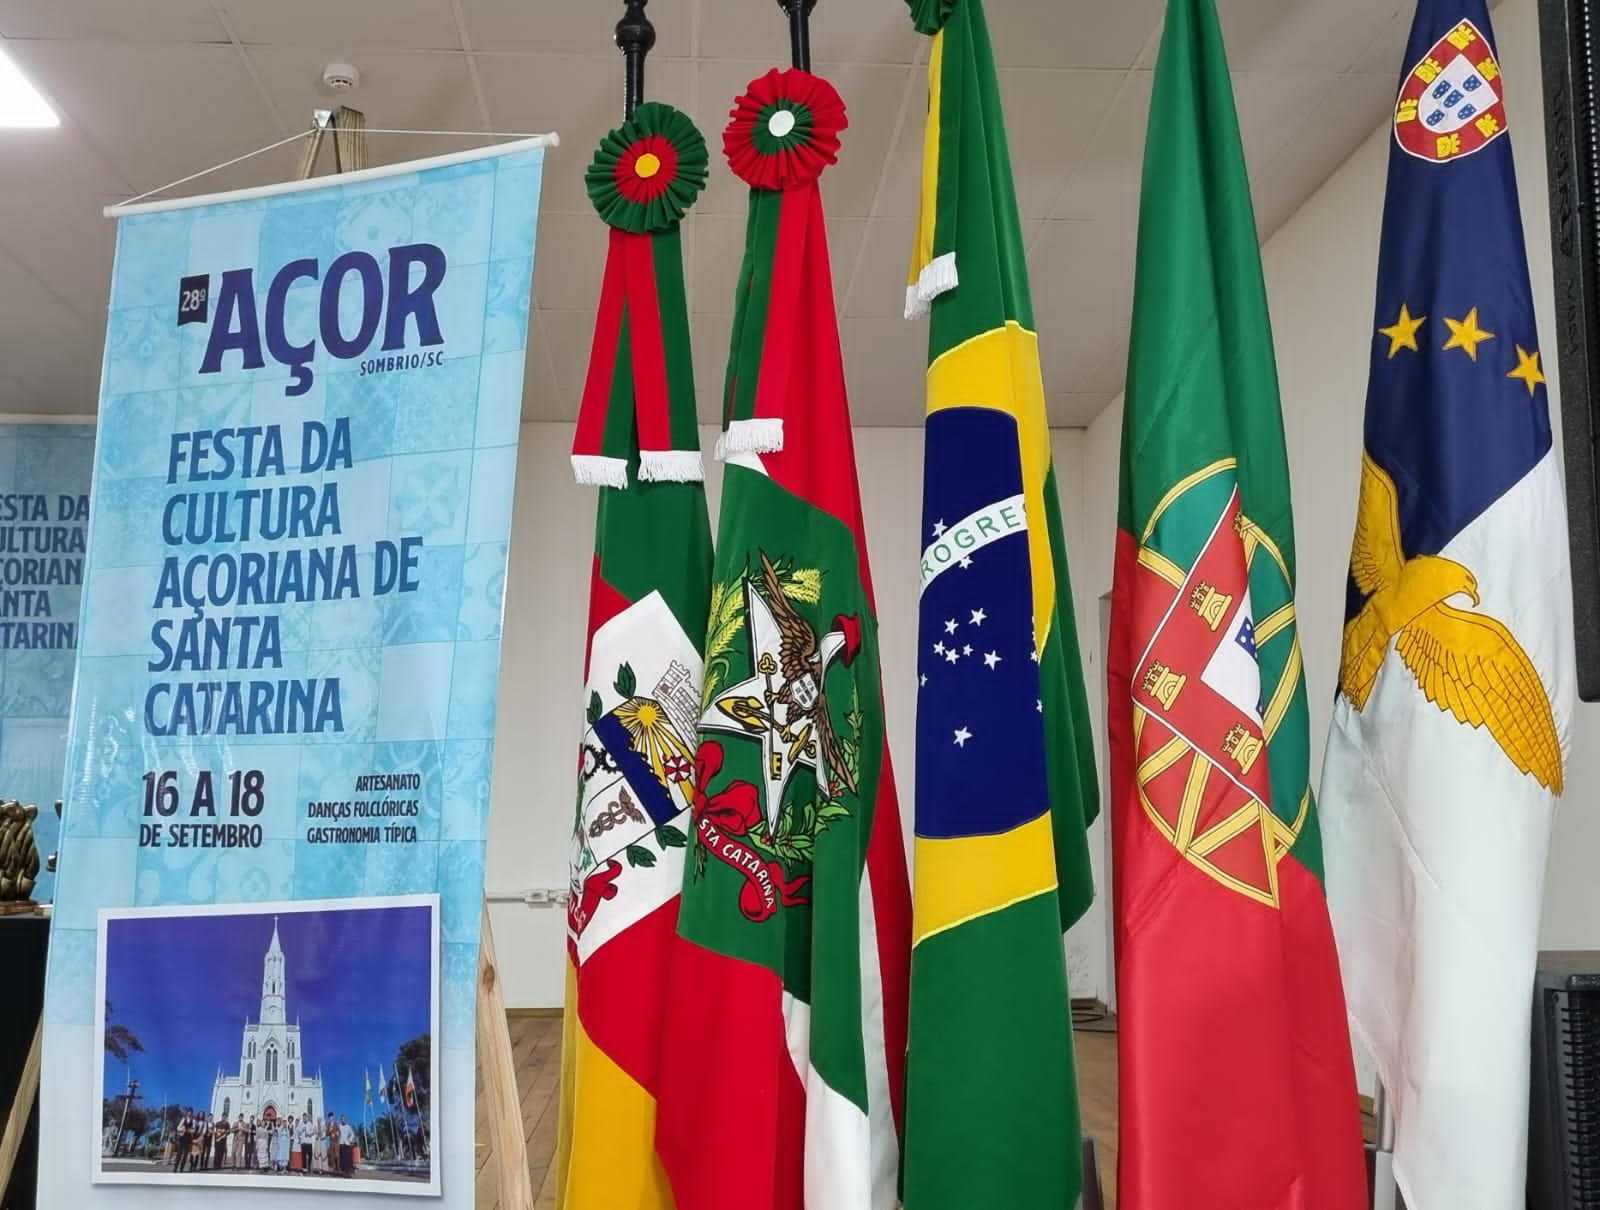 juan passos - IFSC - Instituto Federal de Santa Catarina - Palhoça, Santa  Catarina, Brasil